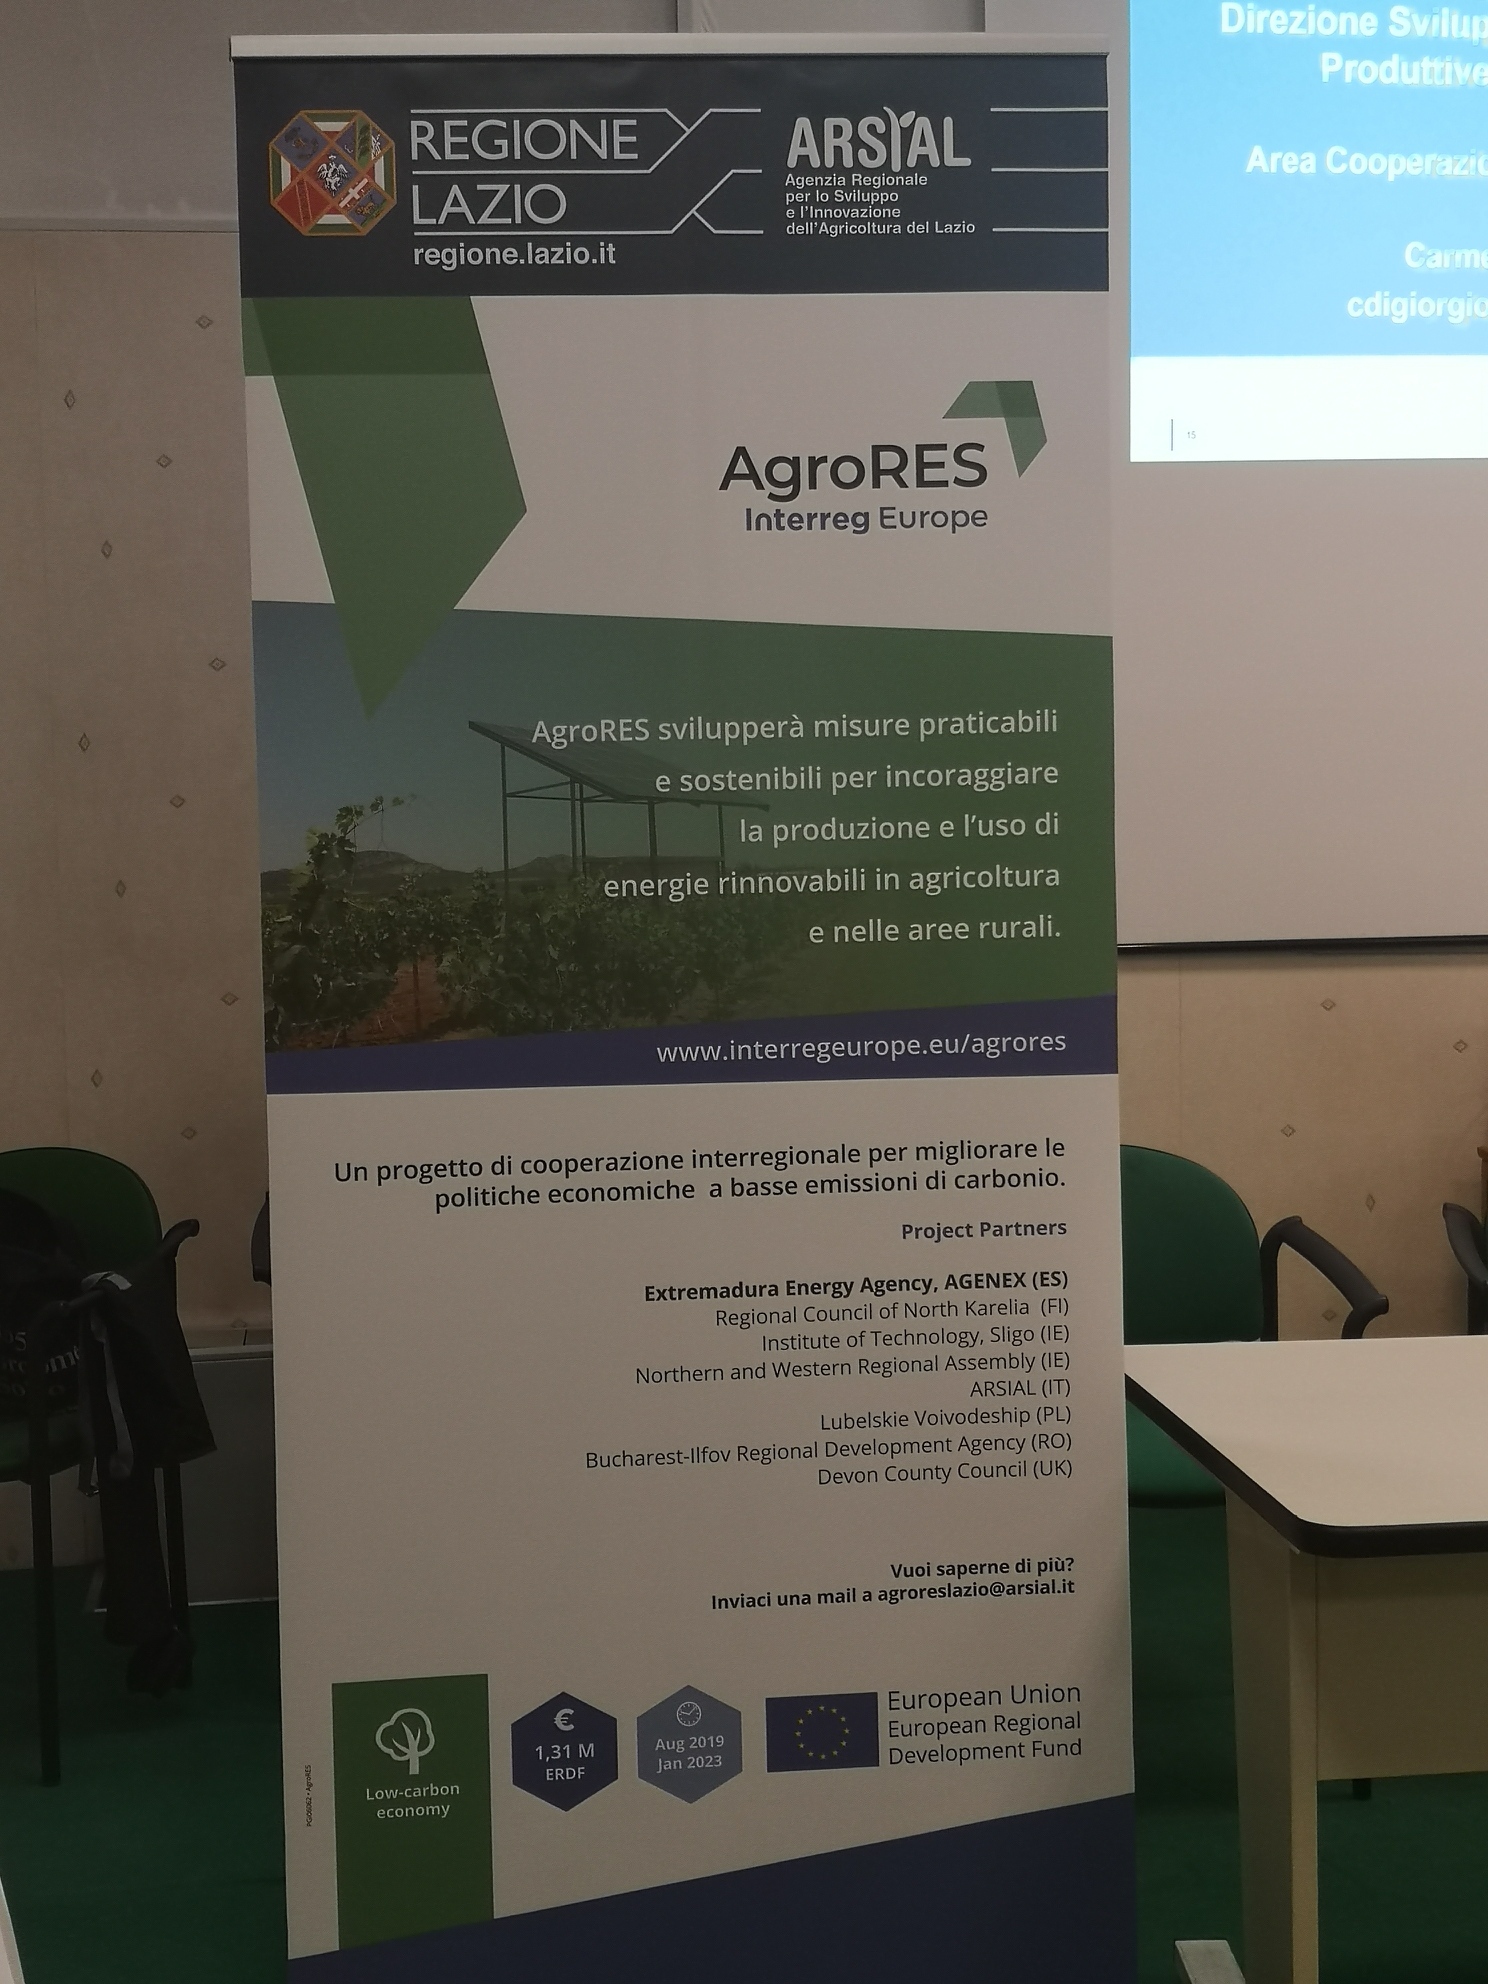 AgroRES started in Lazio region